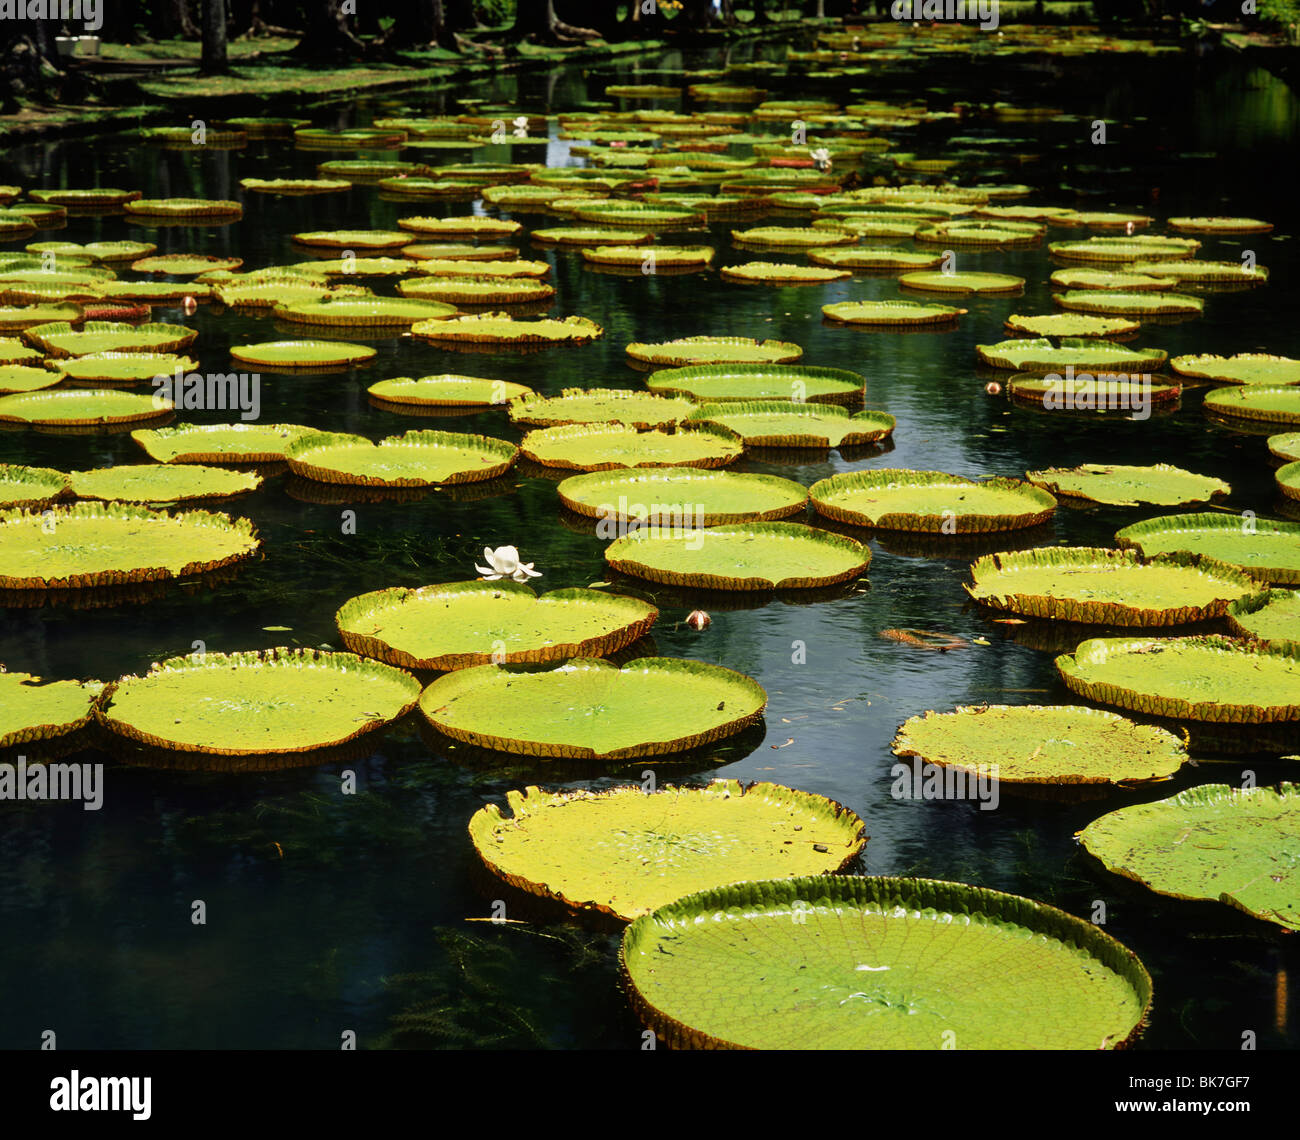 Victoria Regia Pond at Pamplemousses Botanic Garden, Mauritius, Indian Ocean, Africa Stock Photo